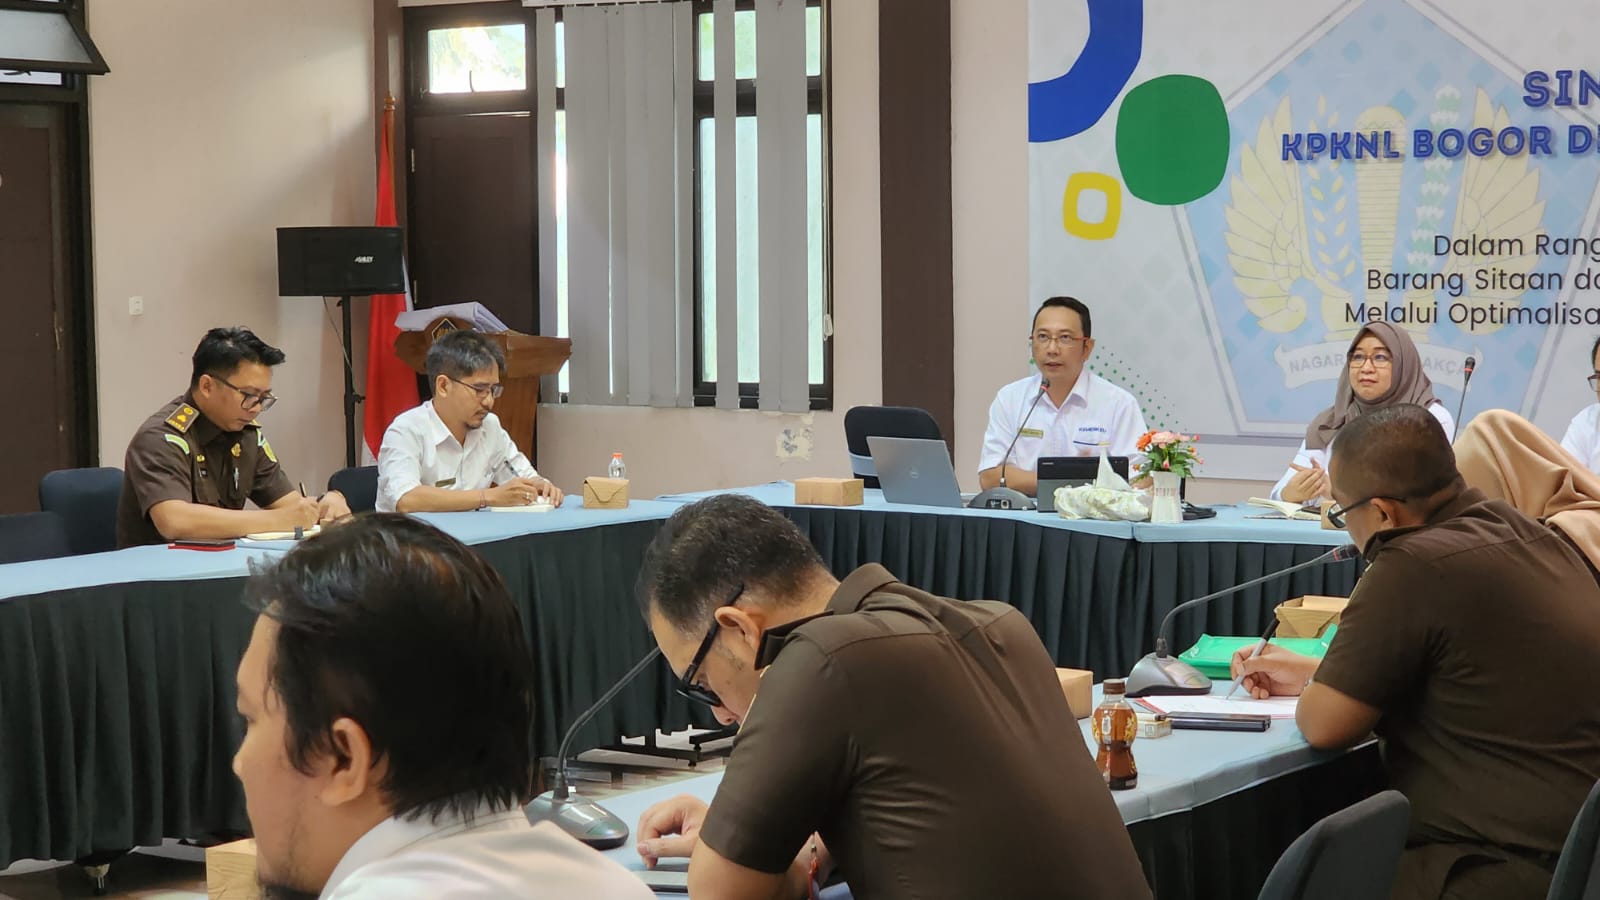 Sinergi KPKNL Bogor dengan Kejaksaan Dalam Rangka Penyelesaian Barang Sitaan dan Rampasan Negara Melalui Optimalisasi Penilaian dan Lelang